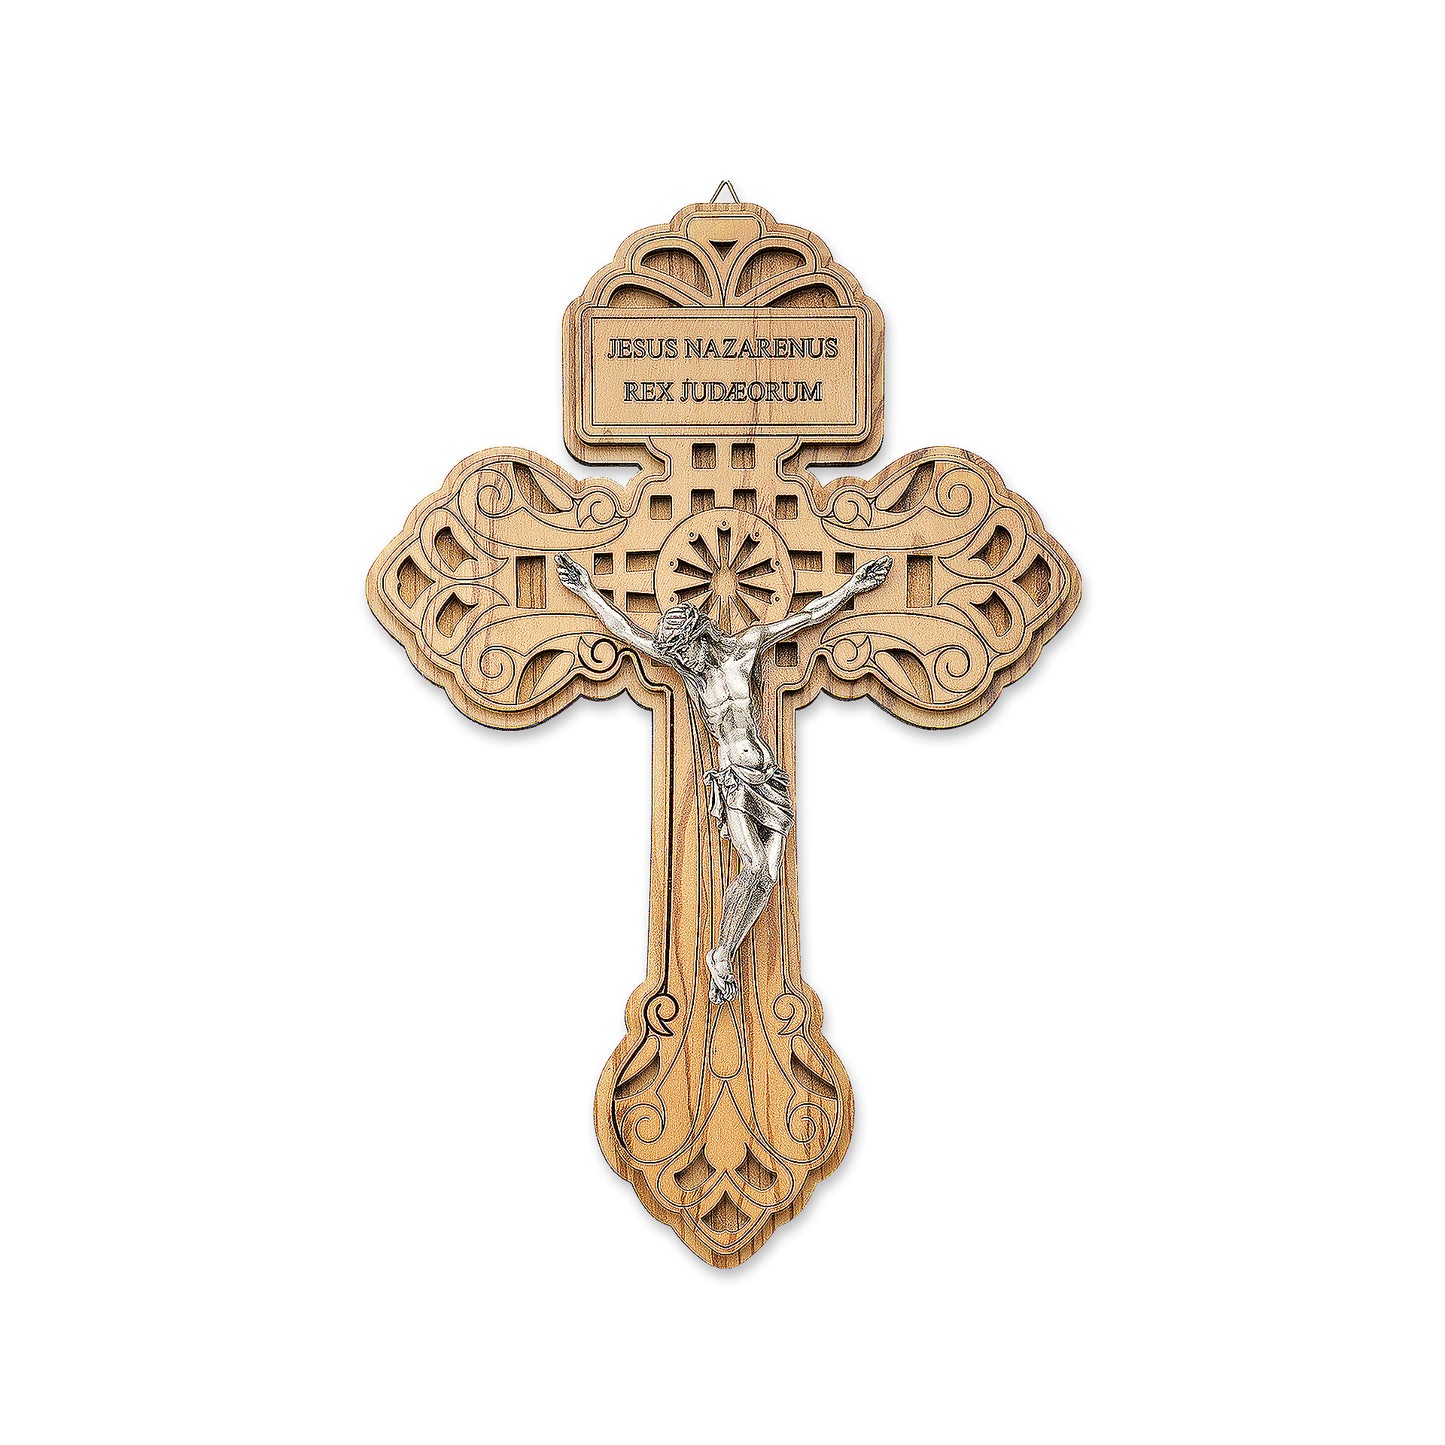 The Perdon Crucifix English Size 11.5 x 8 inches